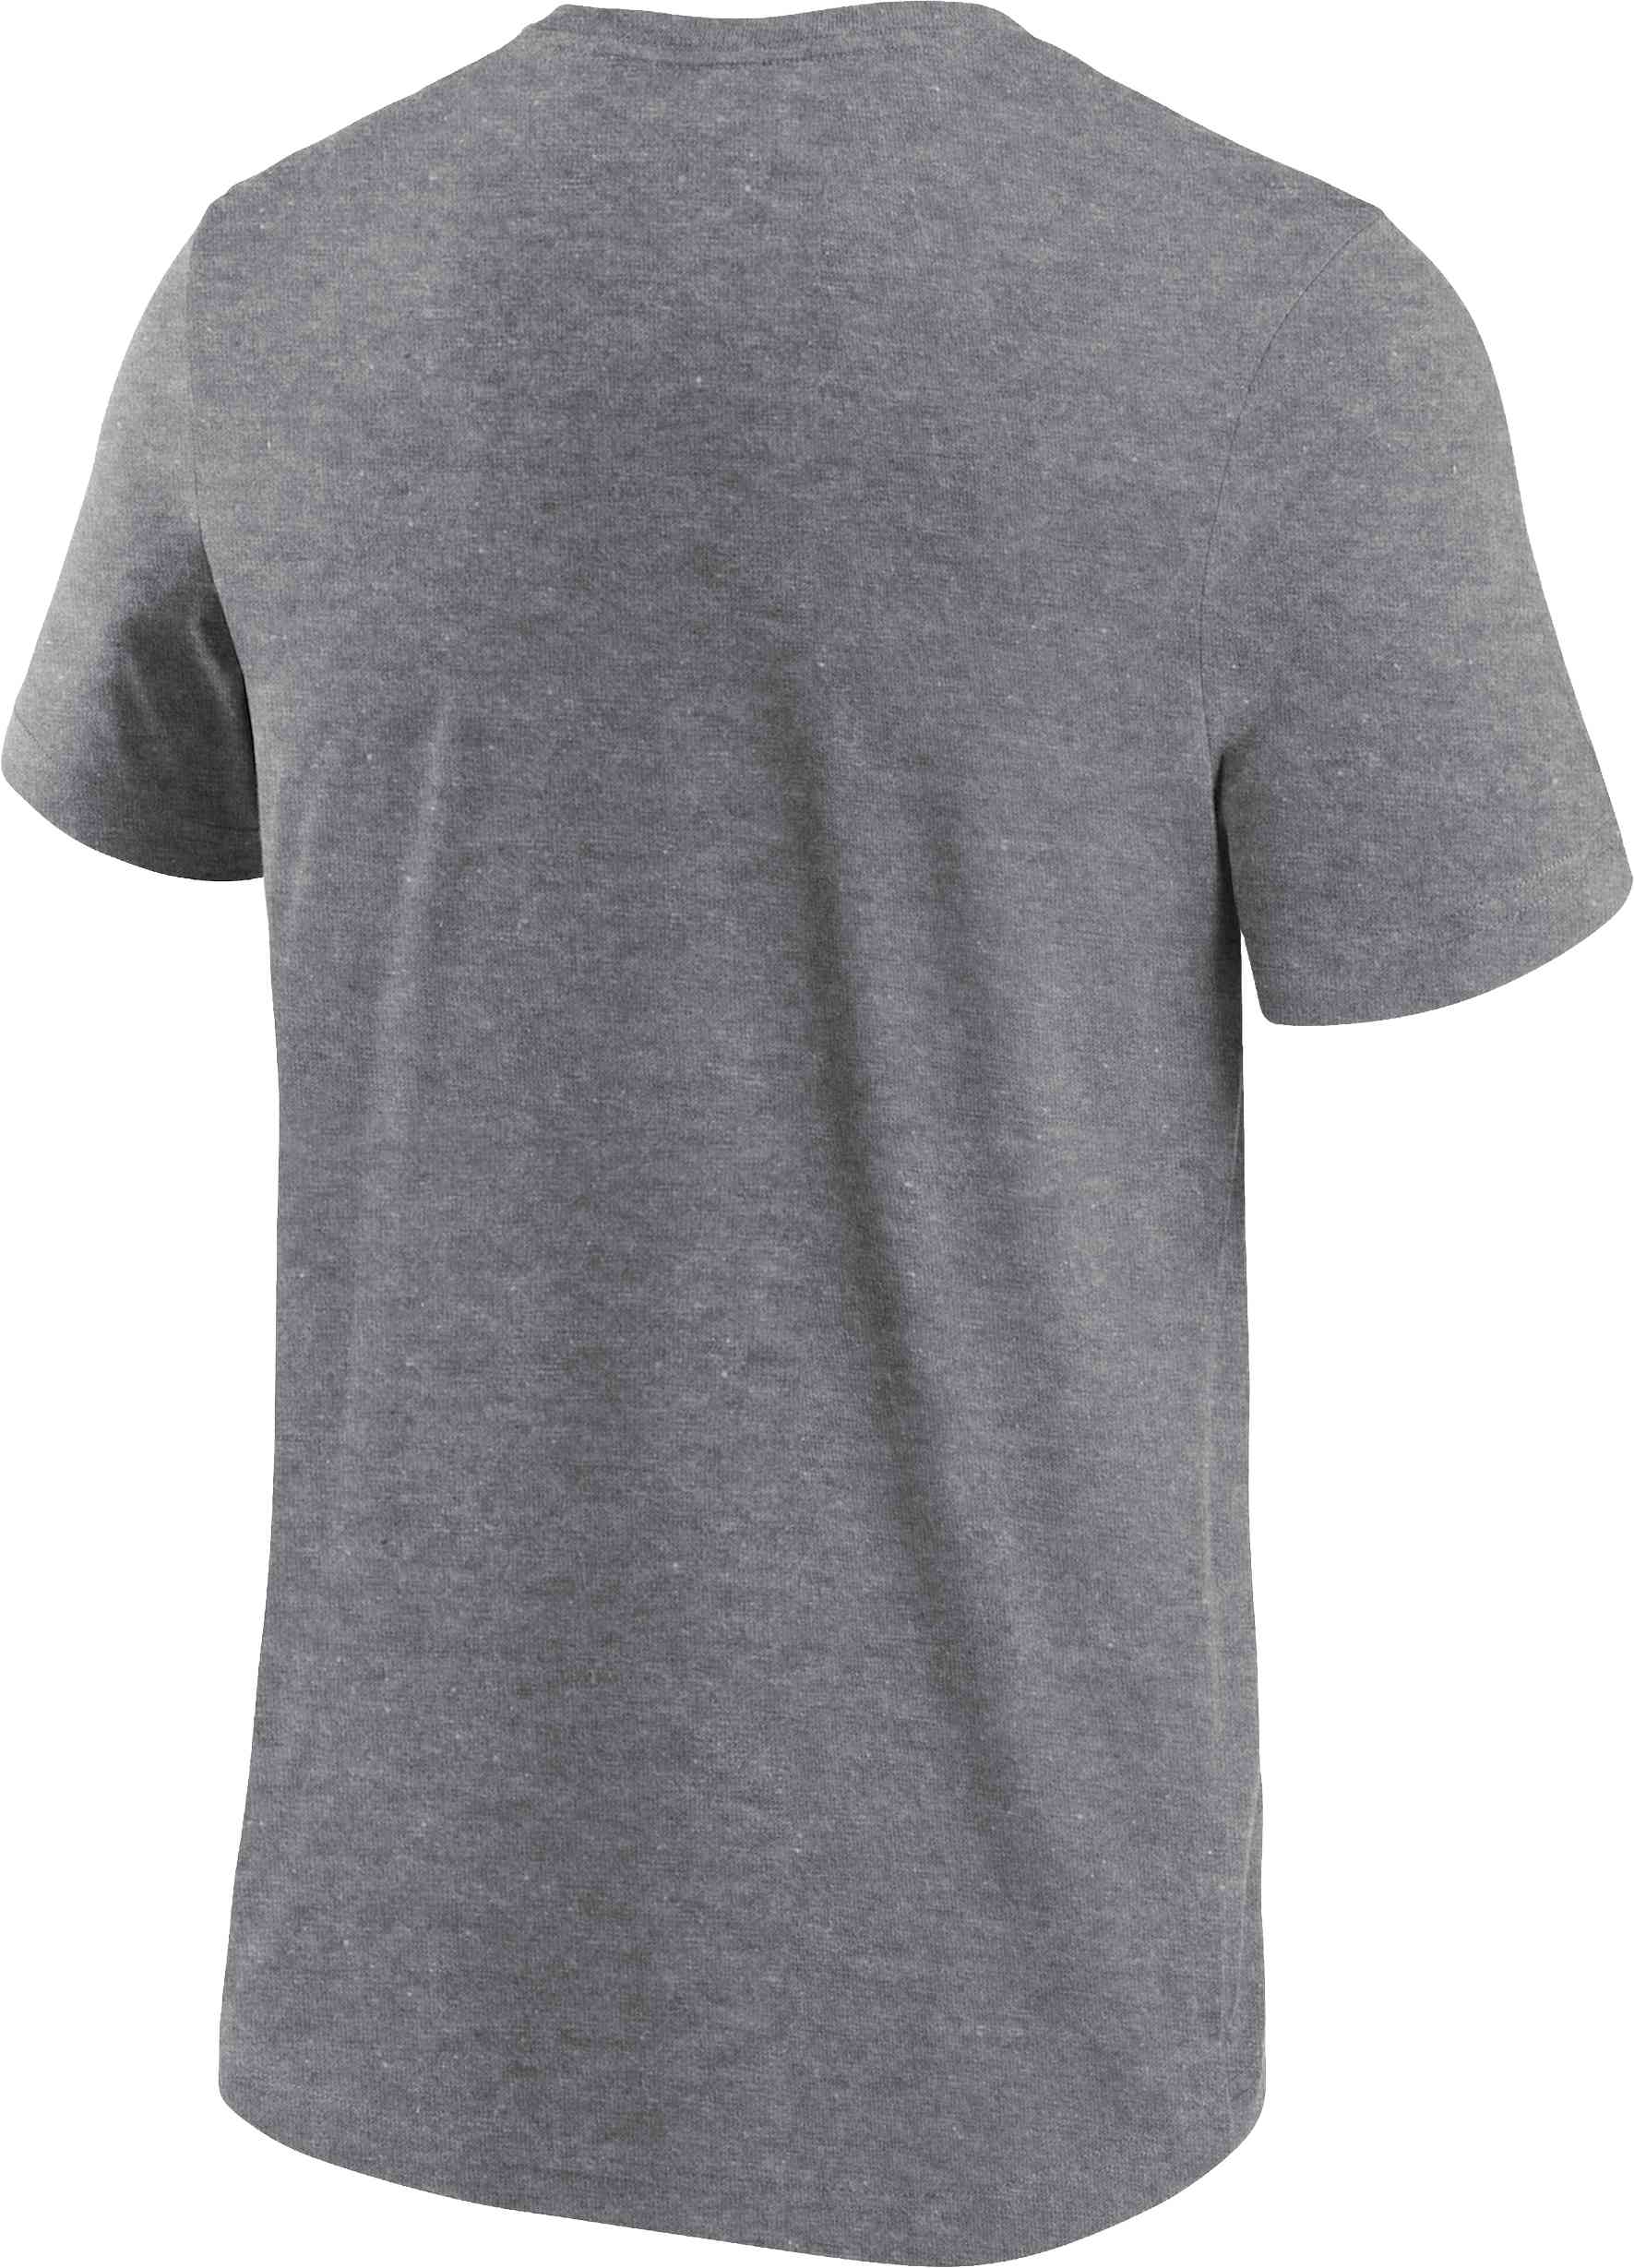 Fanatics - NFL New Orleans Saints Primary Logo Graphic T-Shirt